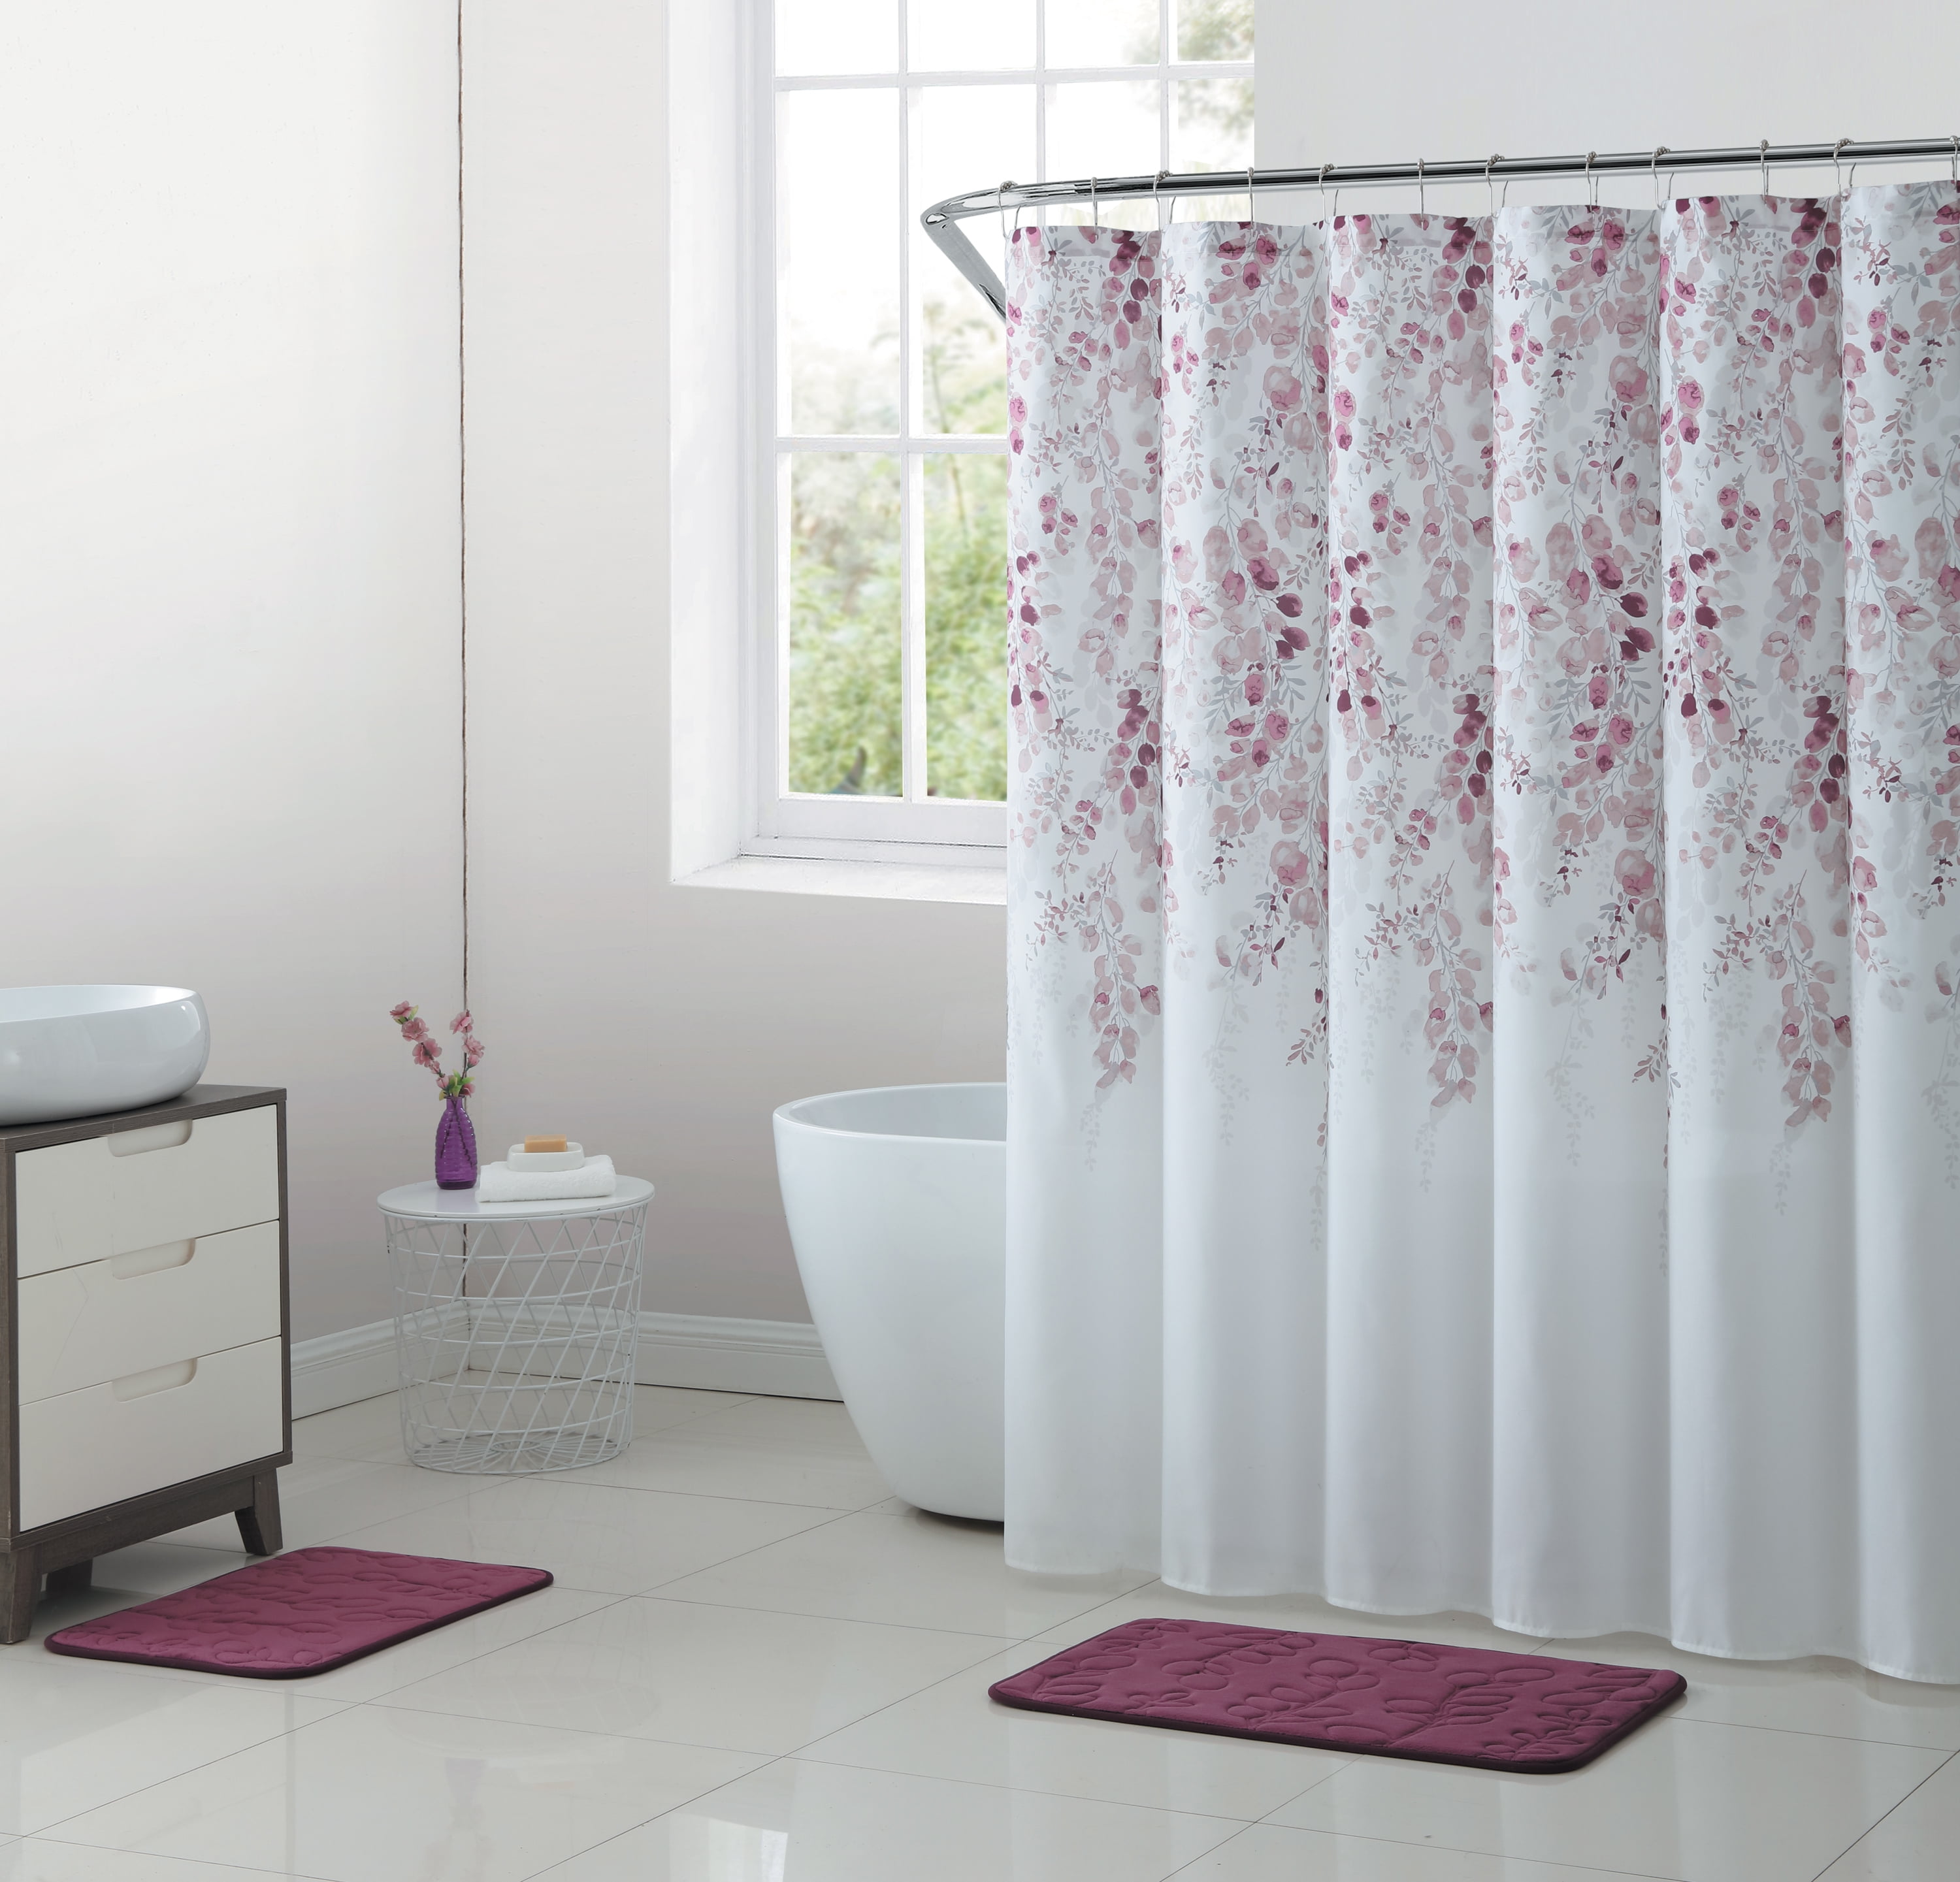 Cool Football Black Shower Curtain Bath Mat Toilet Cover Rug Bathroom Decor 